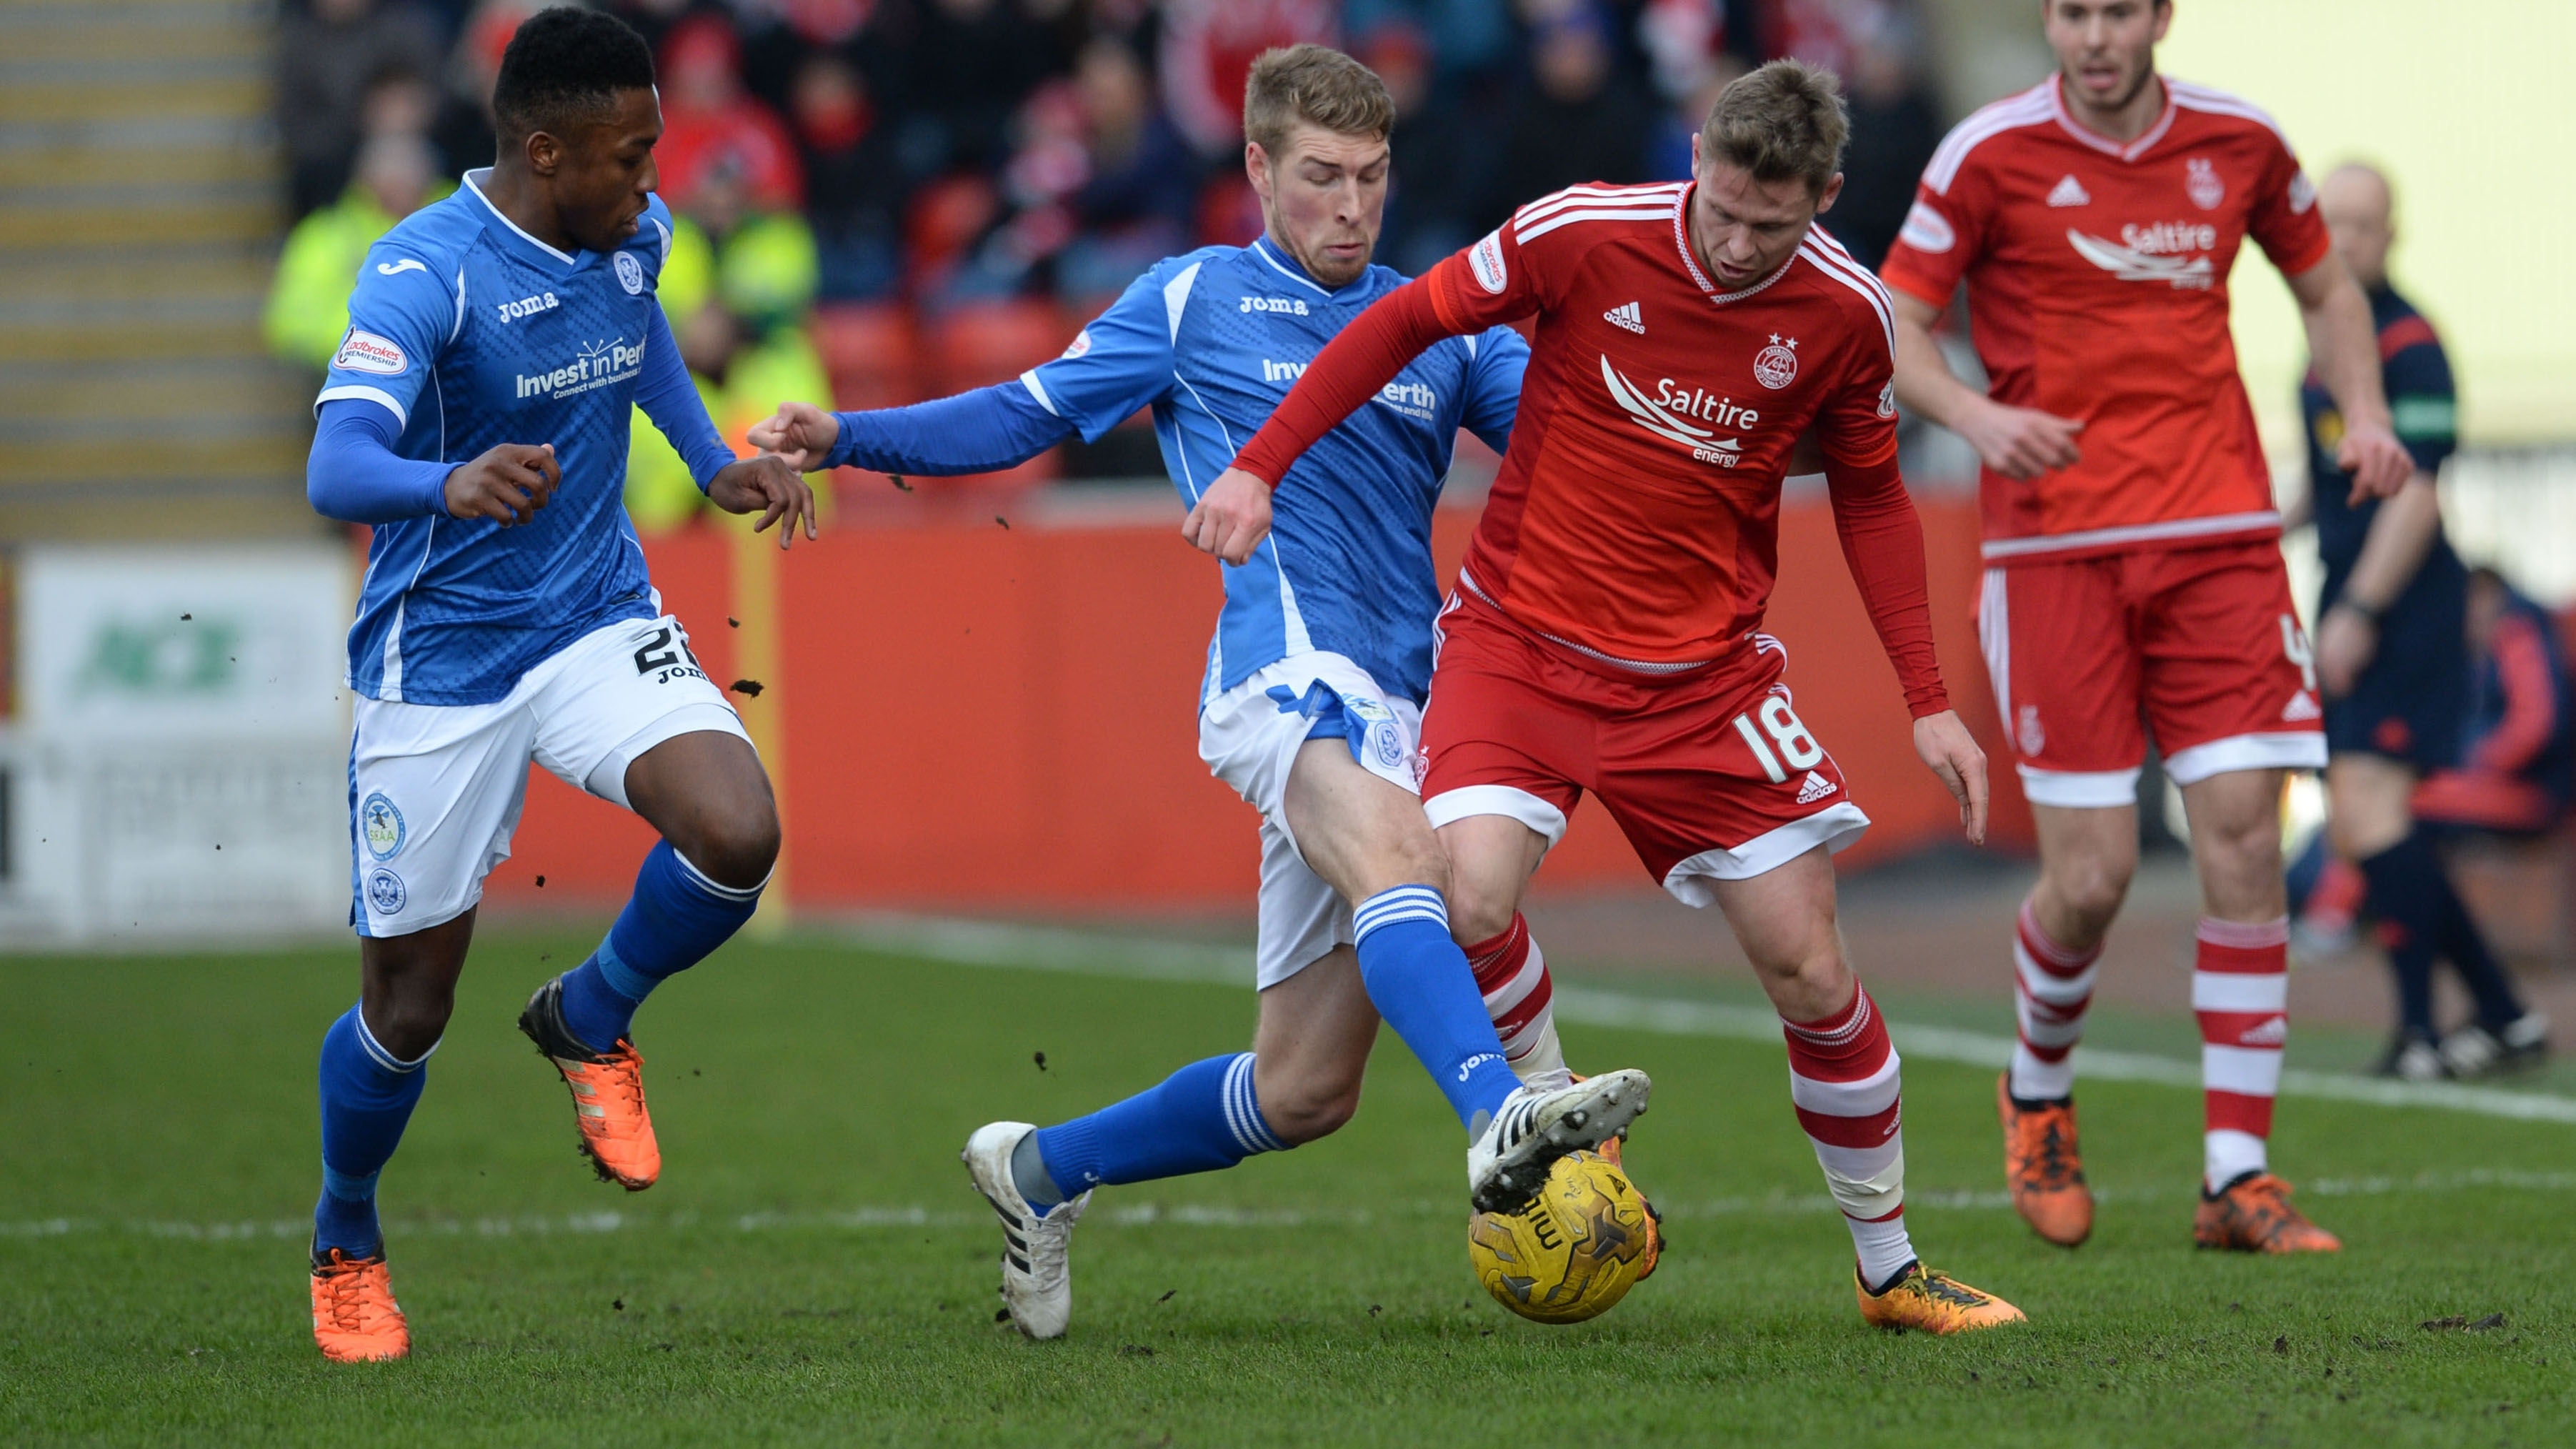 Aberdeen goalscorer Simon Church battles for possession